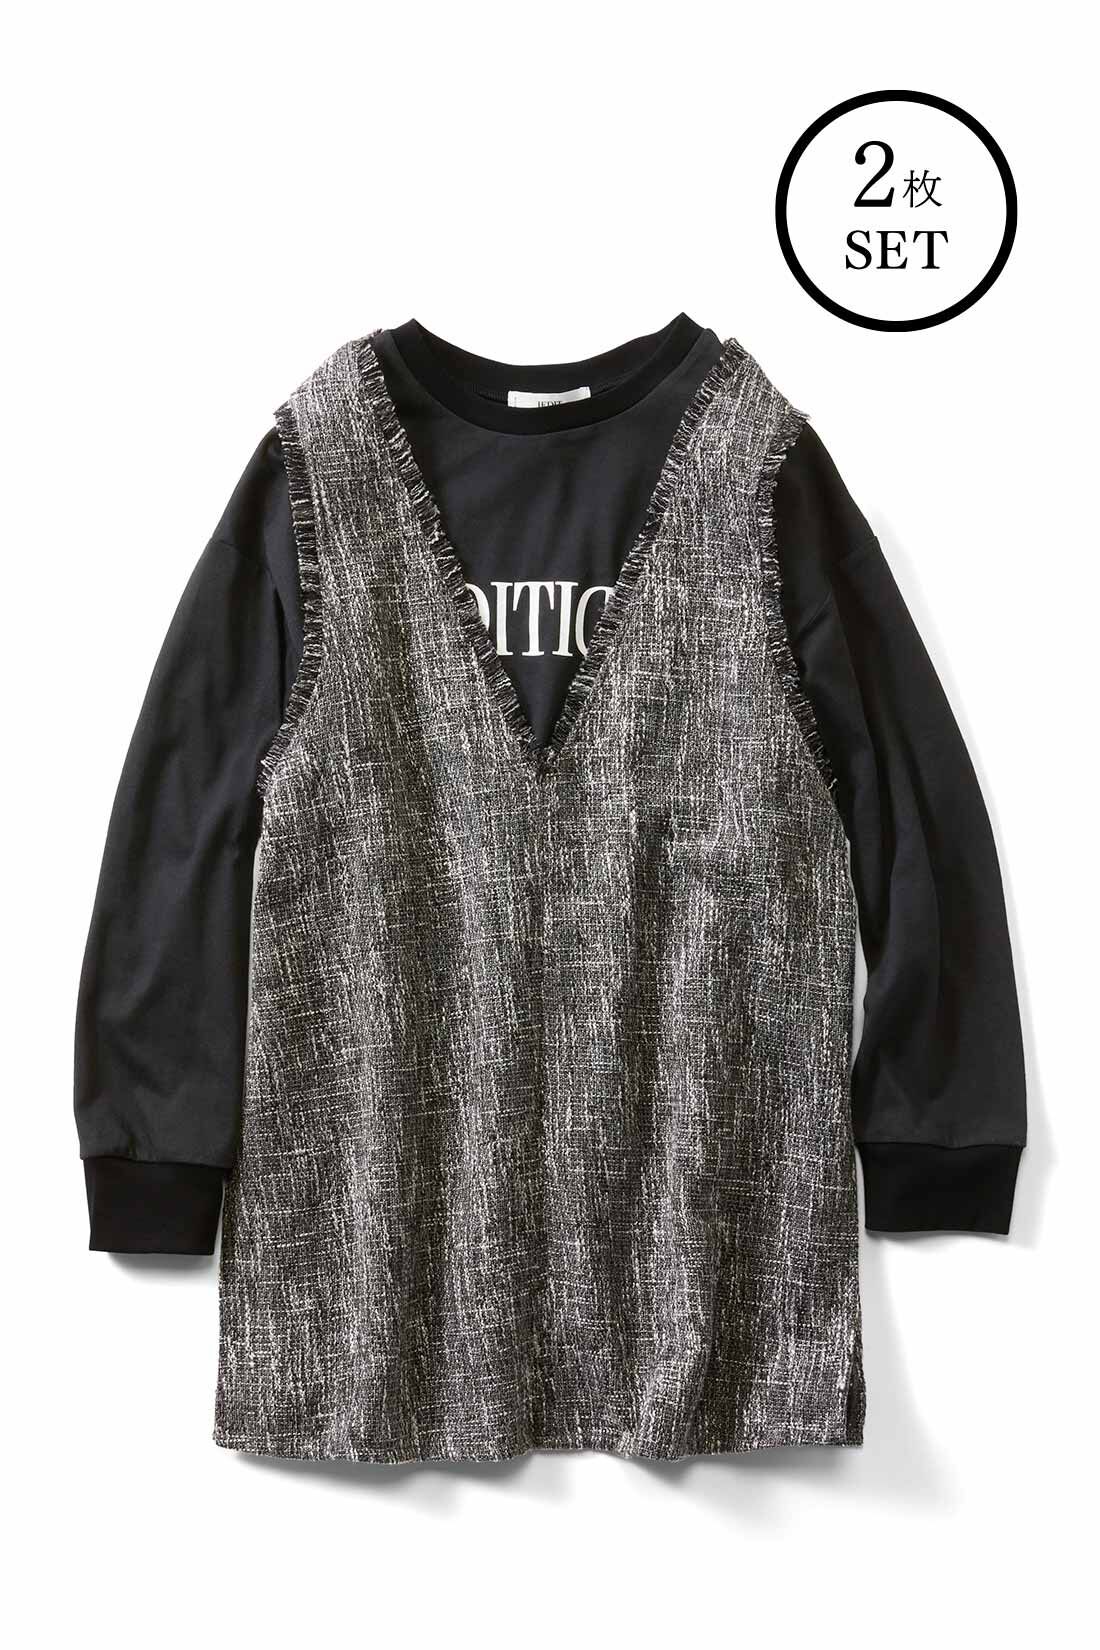 IEDIT[イディット]　こなれコーデがかなう ツイードベストと長袖ロゴTシャツのセット〈ブラック〉|〈ブラック〉